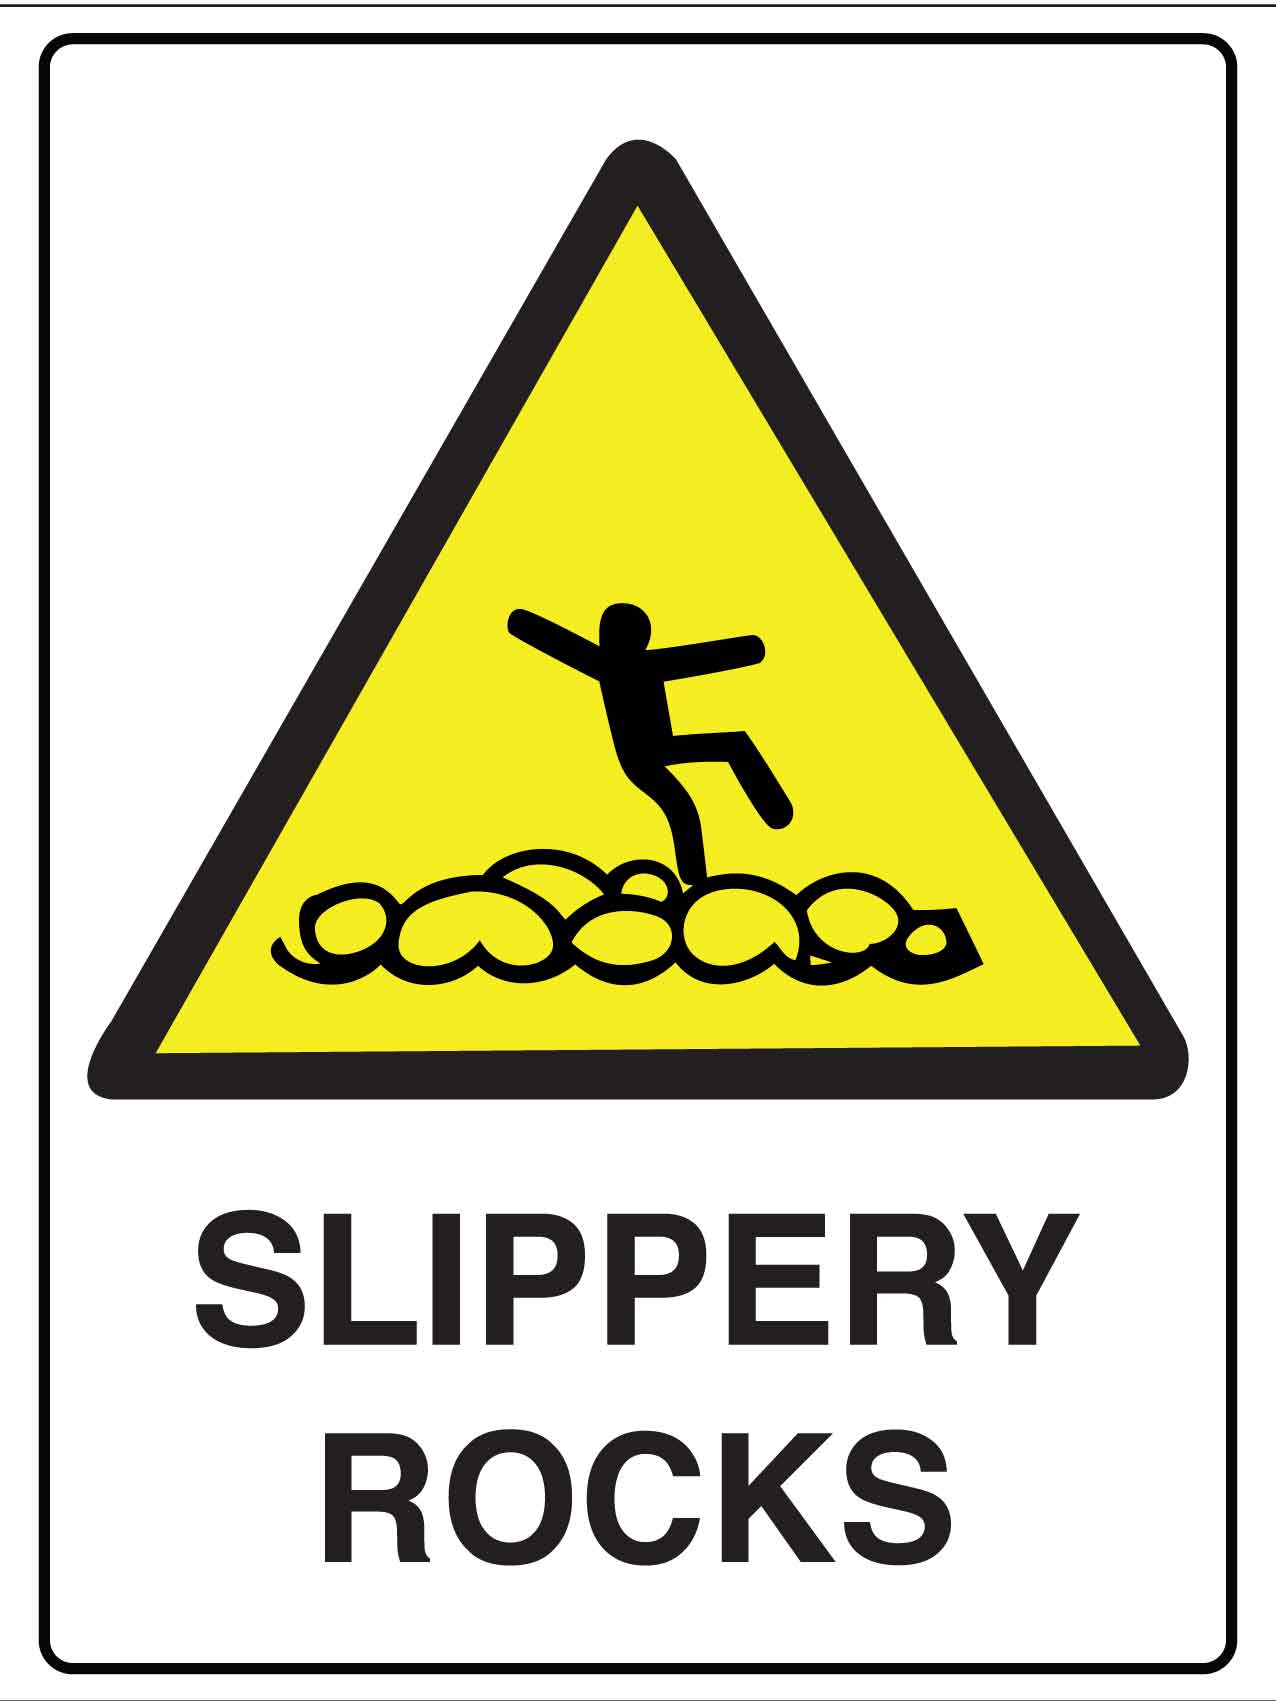 Caution Slippery Rocks Sign